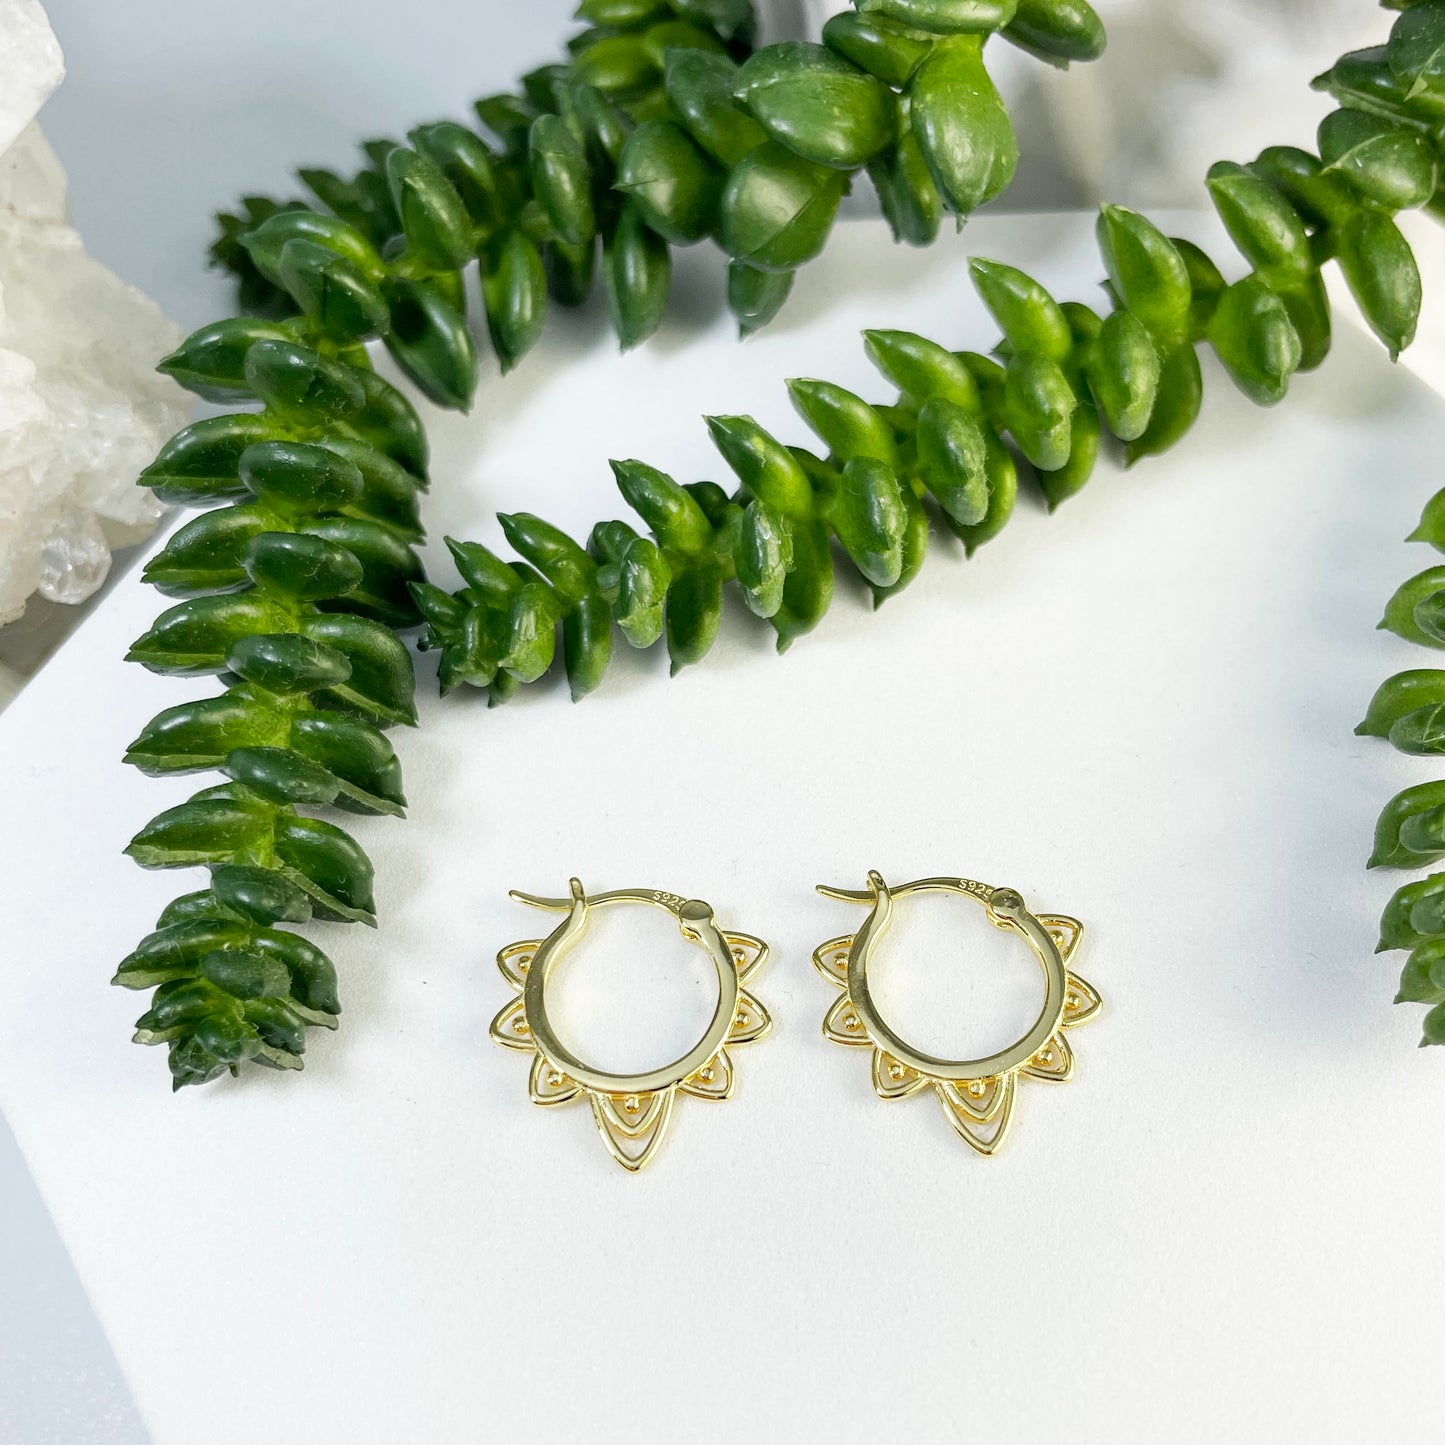 Boho Moon - Gold Plated Sterling Earrings